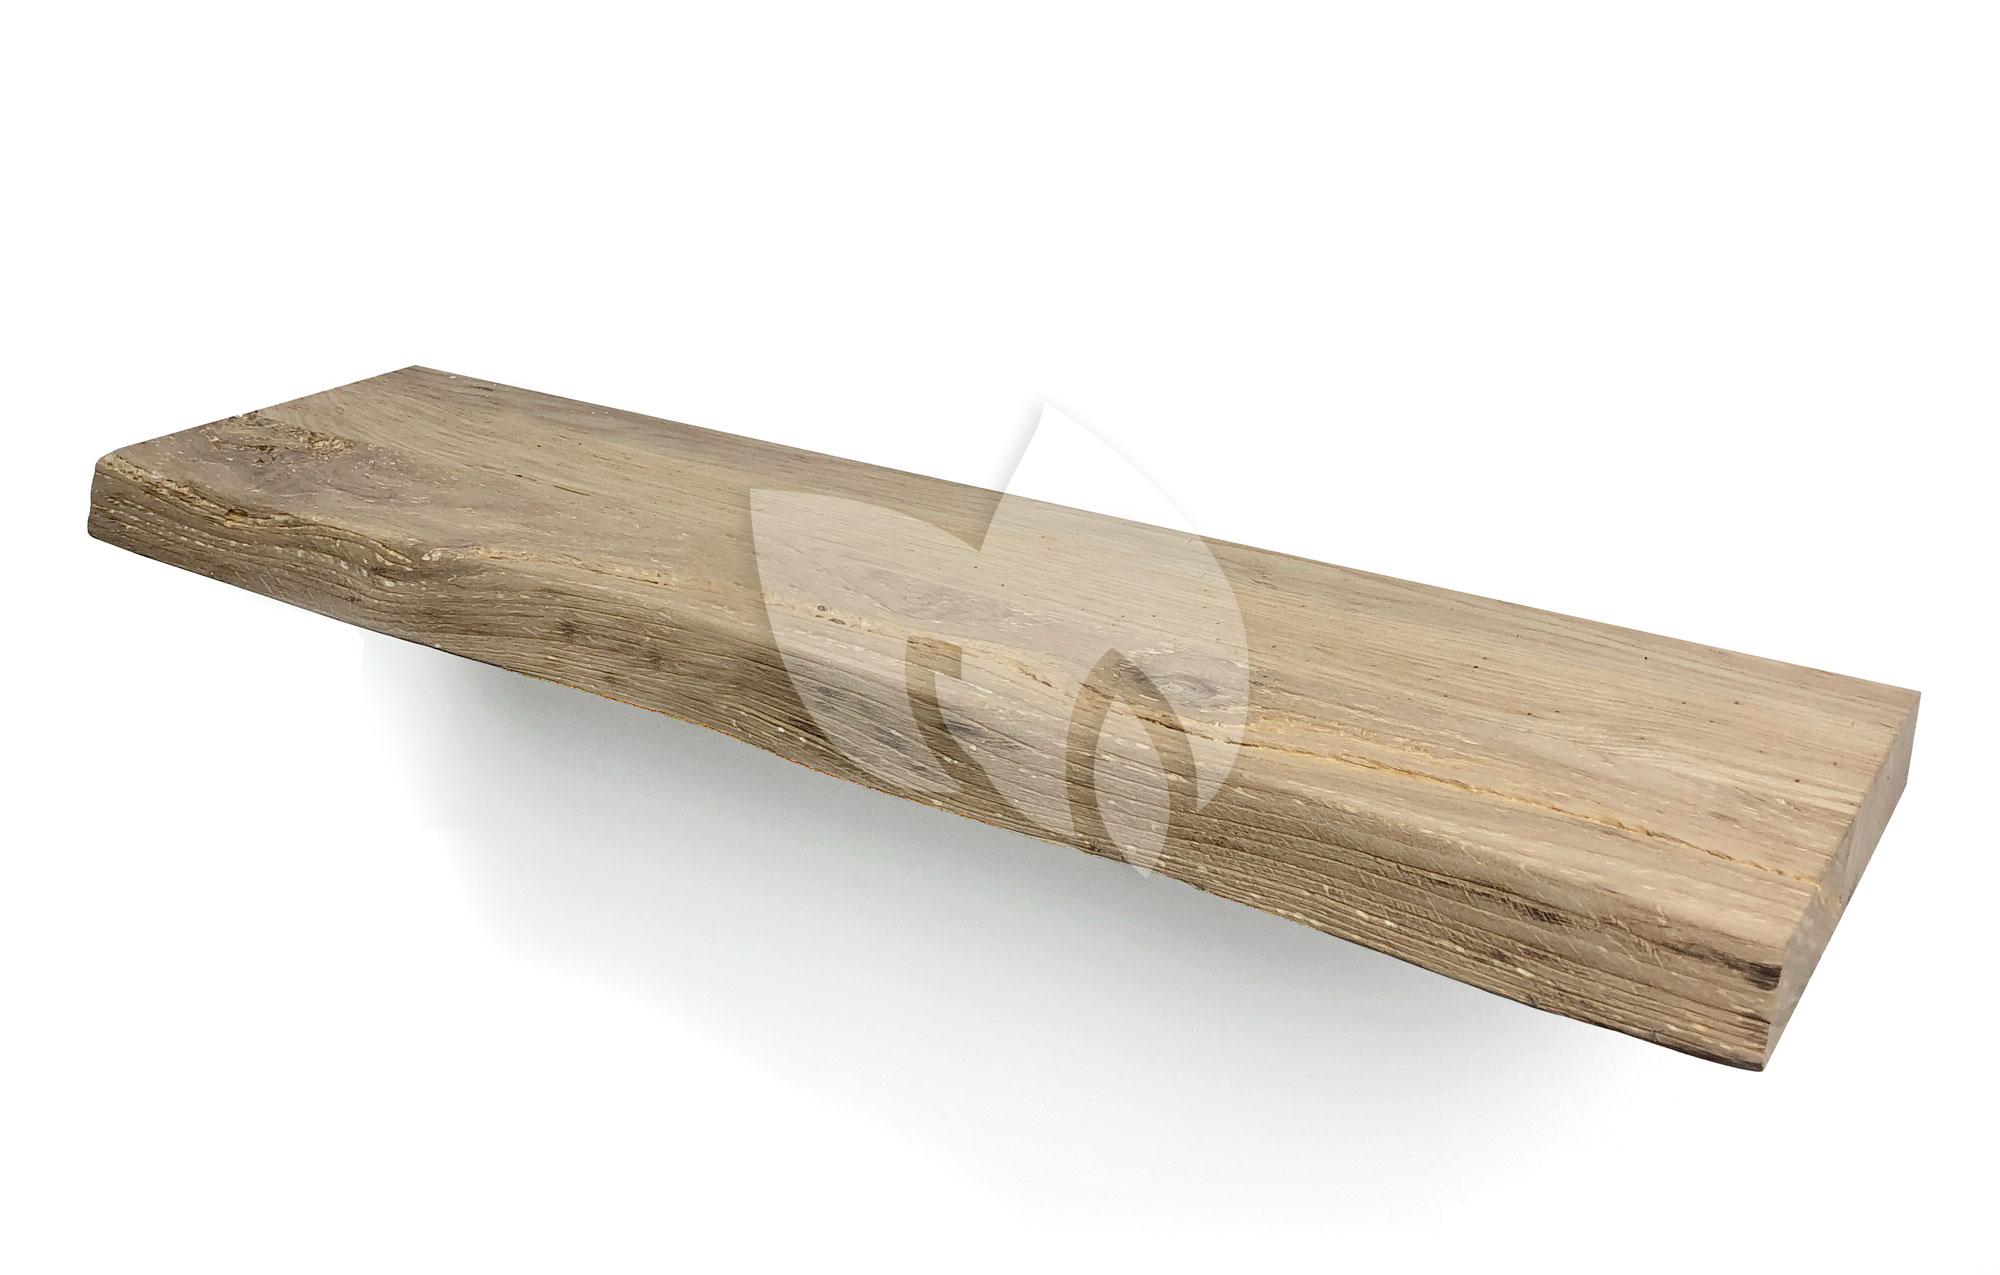 Bijwerken Moreel Perth Wood Brothers Zwevende wandplank oud eiken boomstam 100 x 20 cm |  Tuinexpress.nl